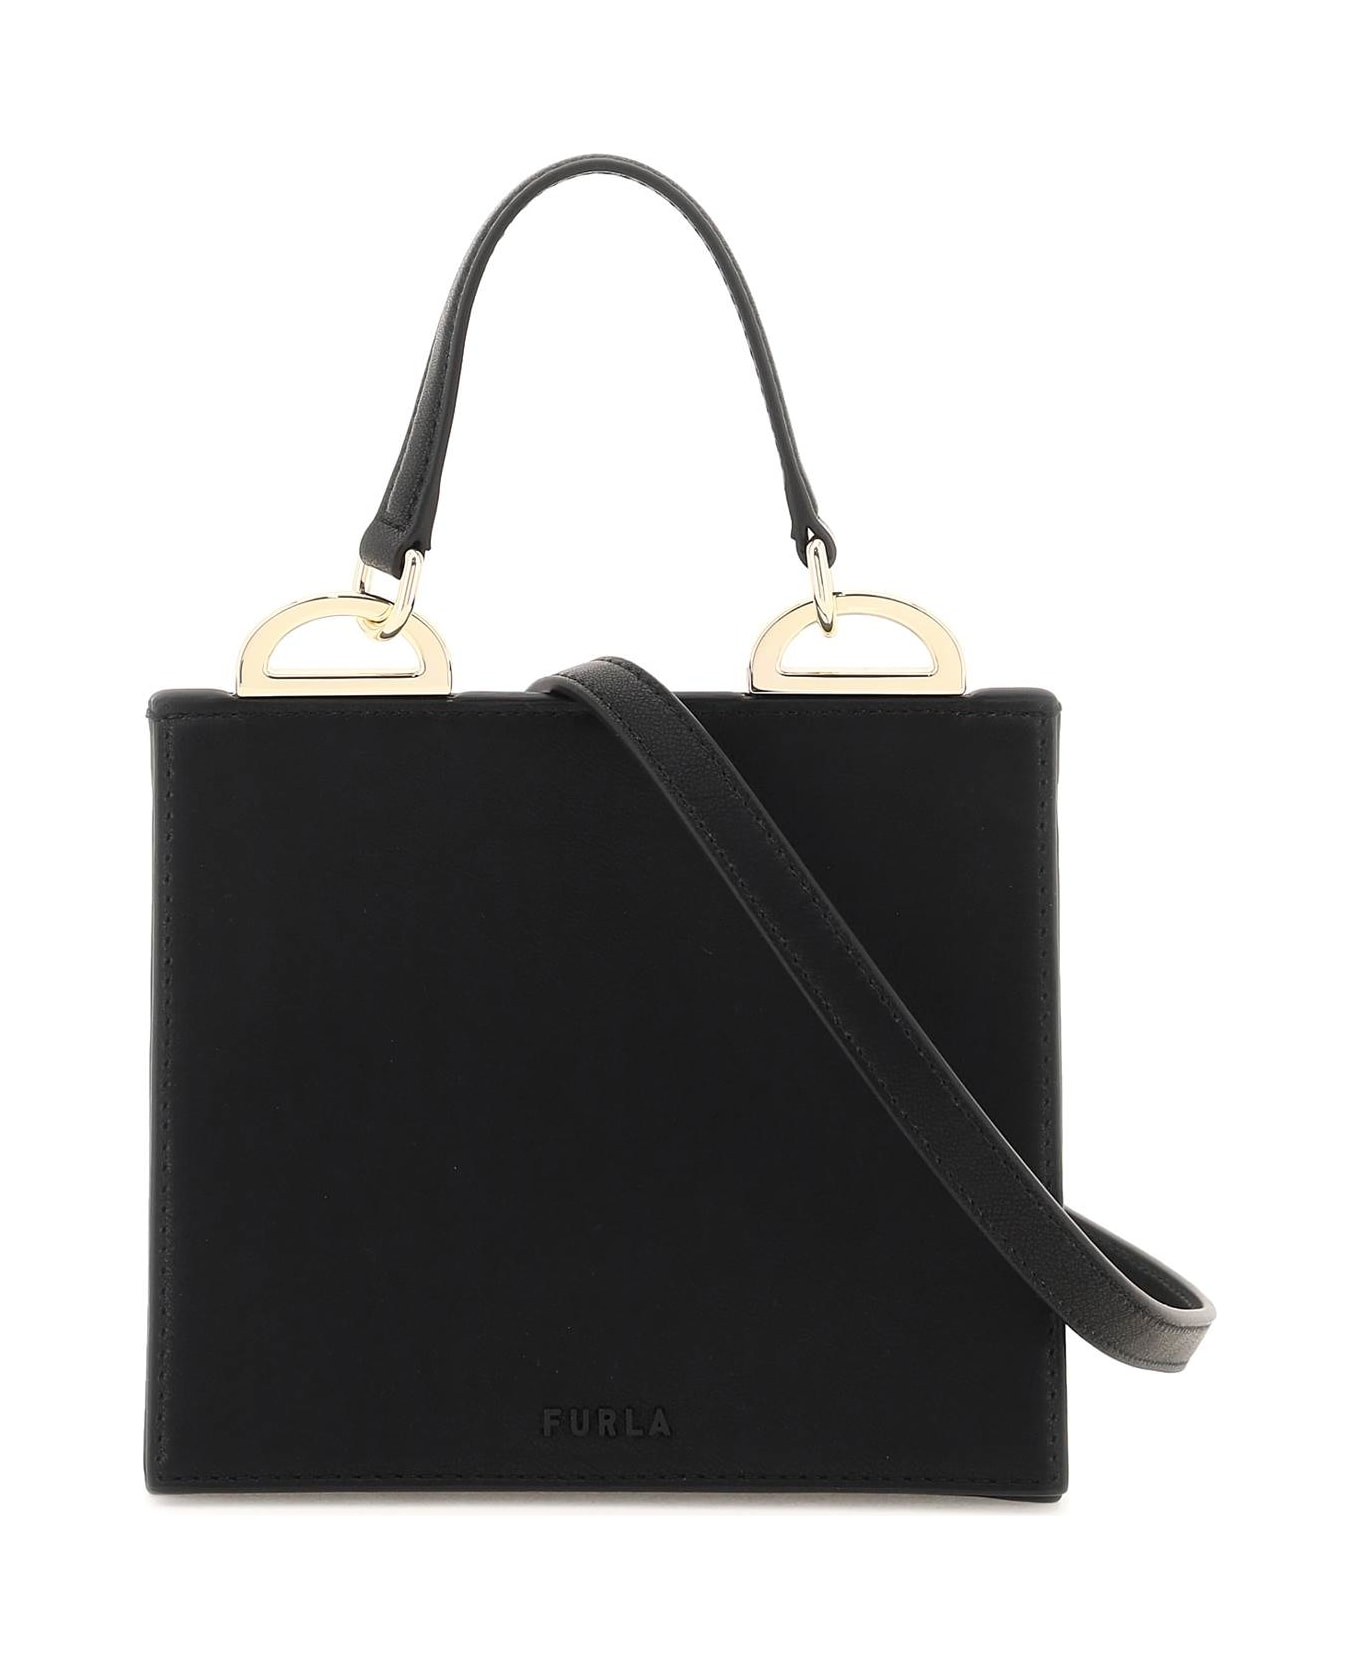 Furla 'futura' Mini Handbag - Black トートバッグ